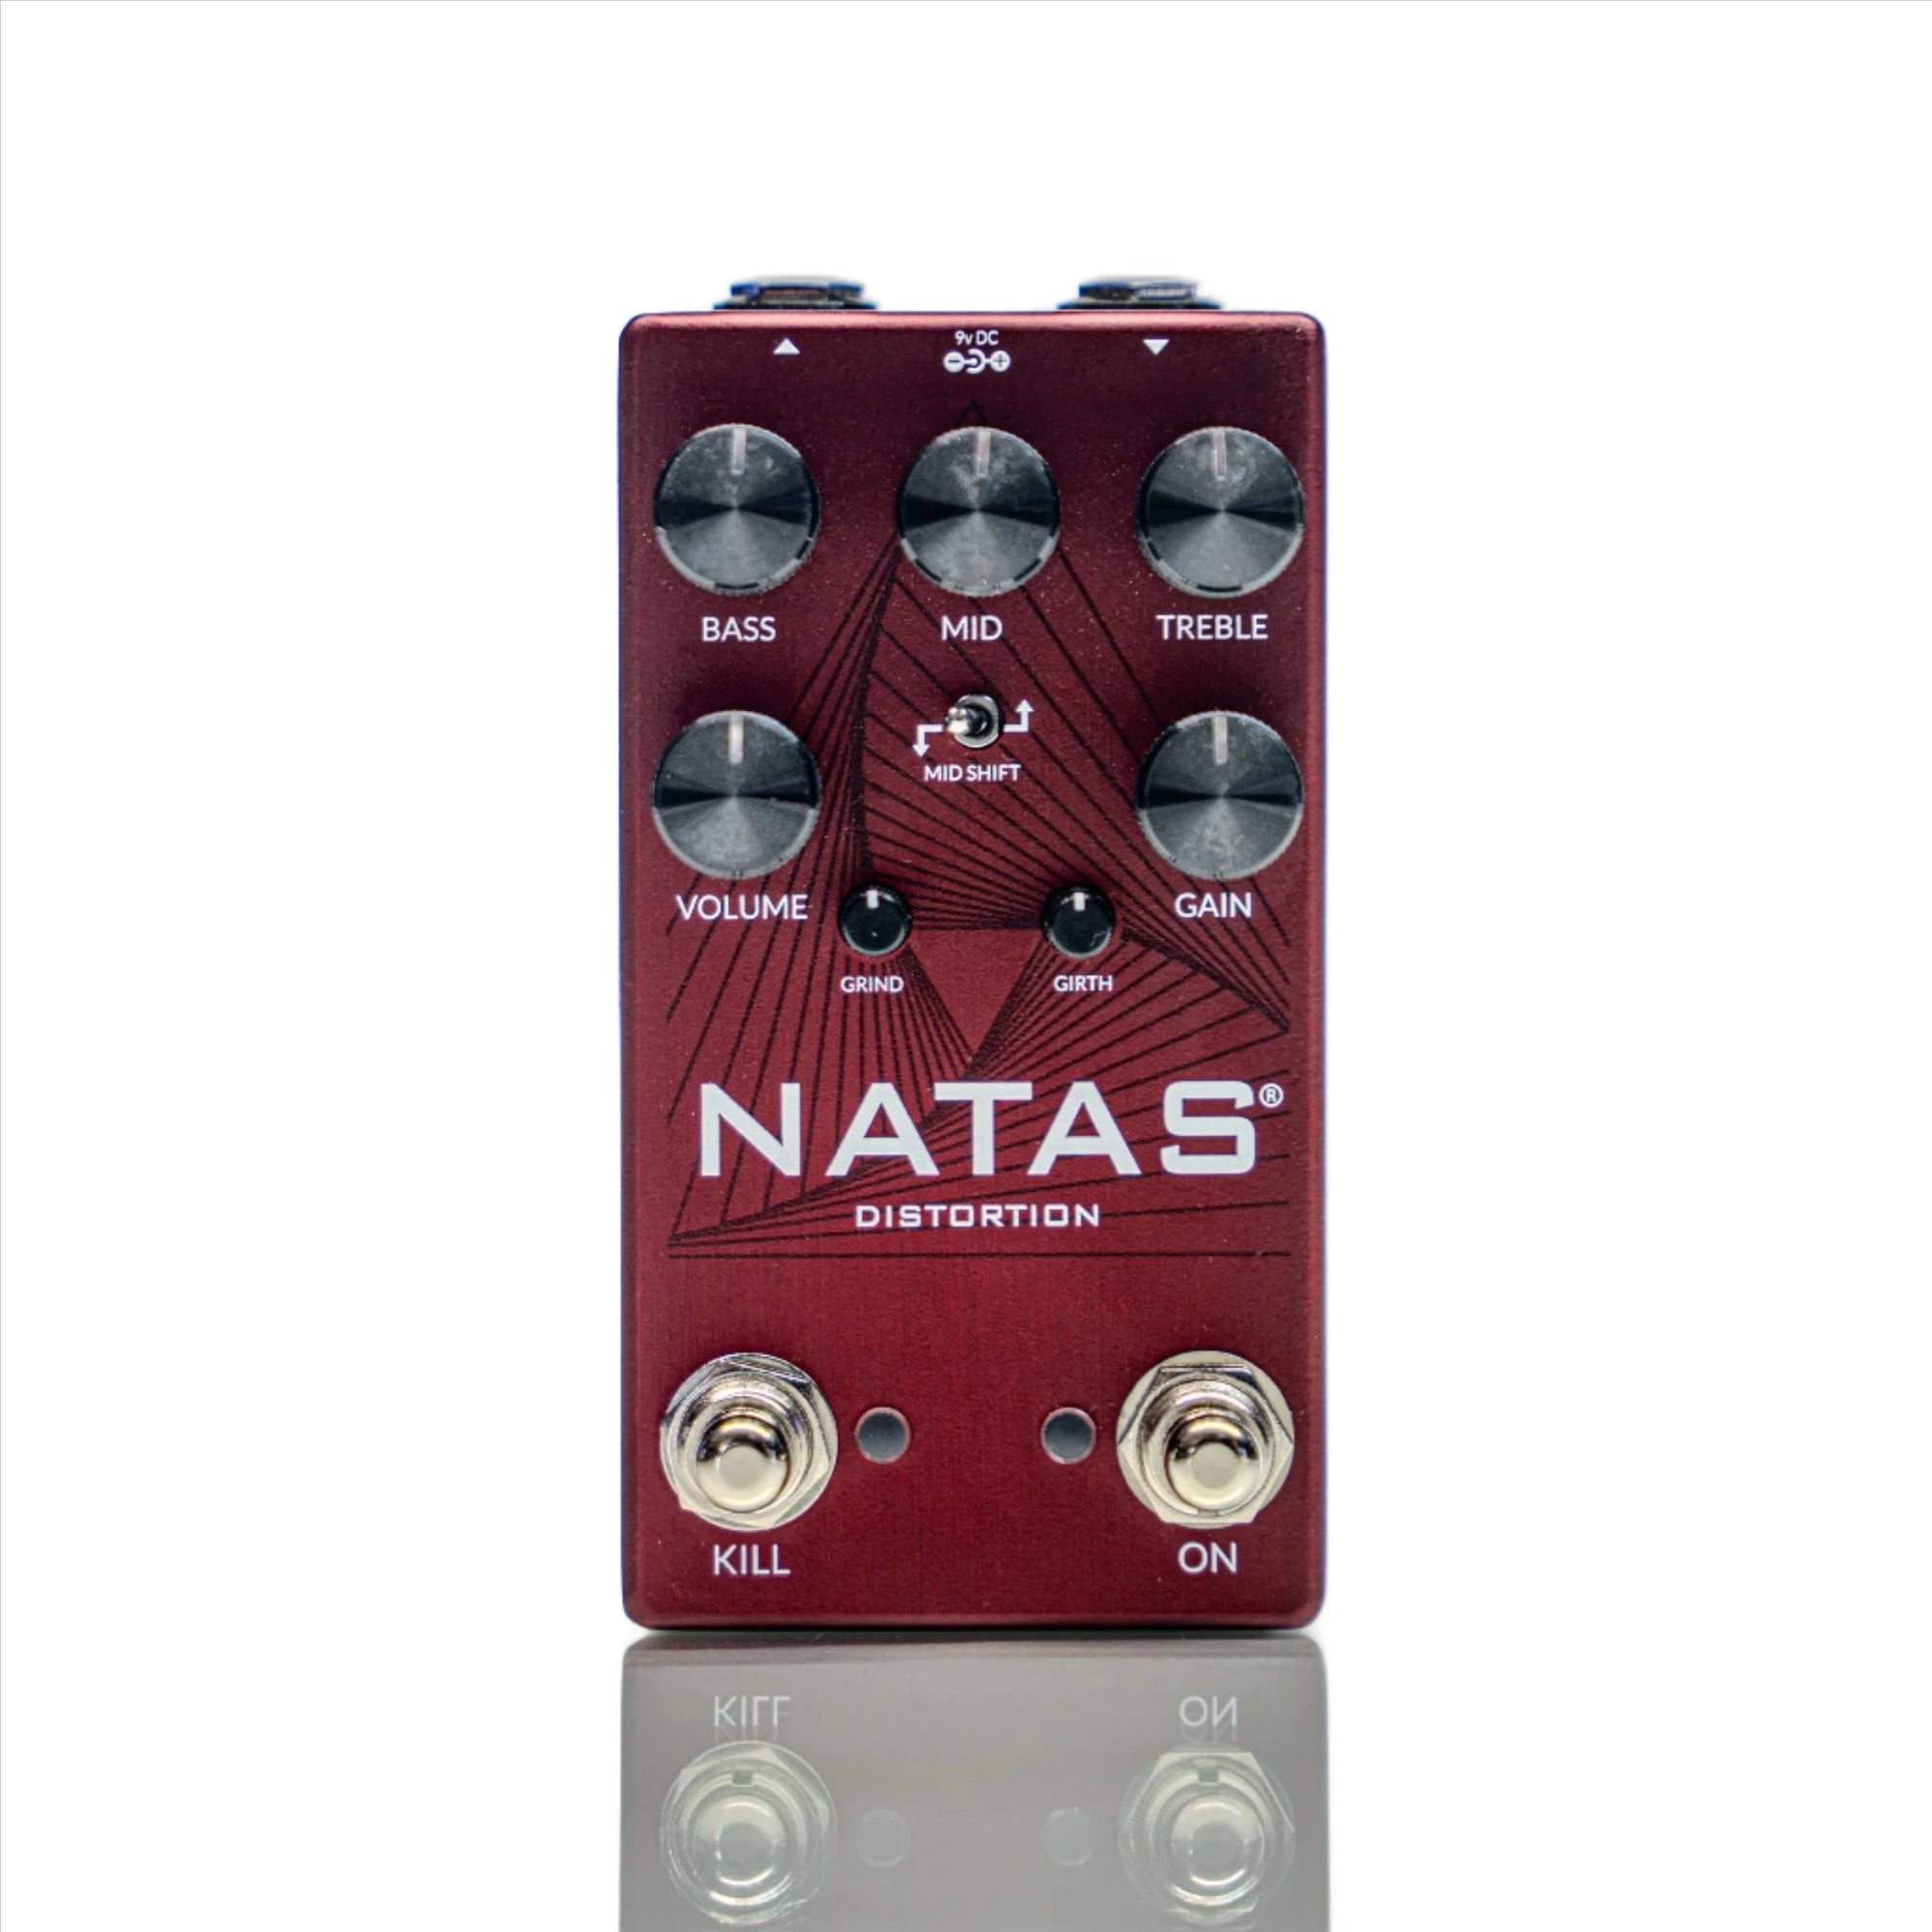 NATAS pedal